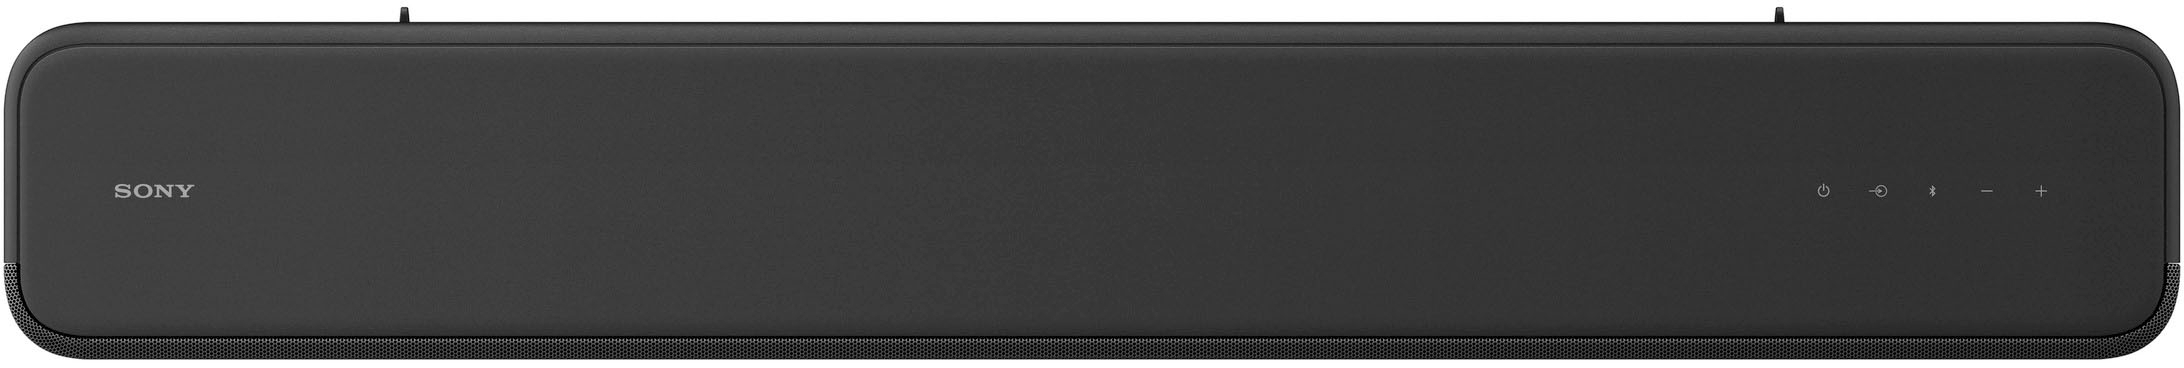 Sony HT-S2000 Compact HTS2000 Best Buy Black Dolby 3.1ch Soundbar Atmos 